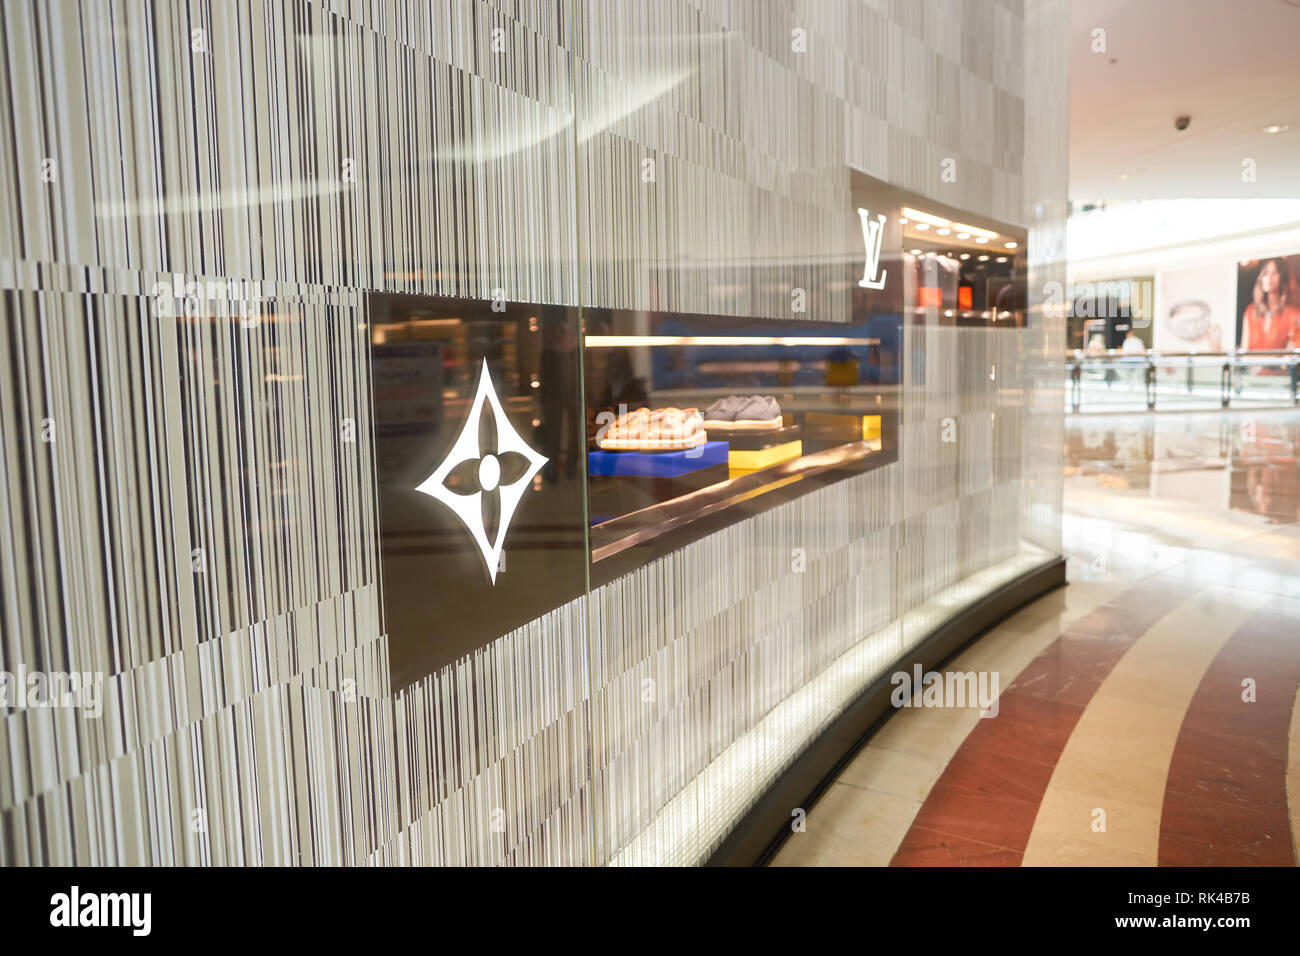 Malaysia, Kuala Lumpur, Louis Vuitton shop at the bottom of the